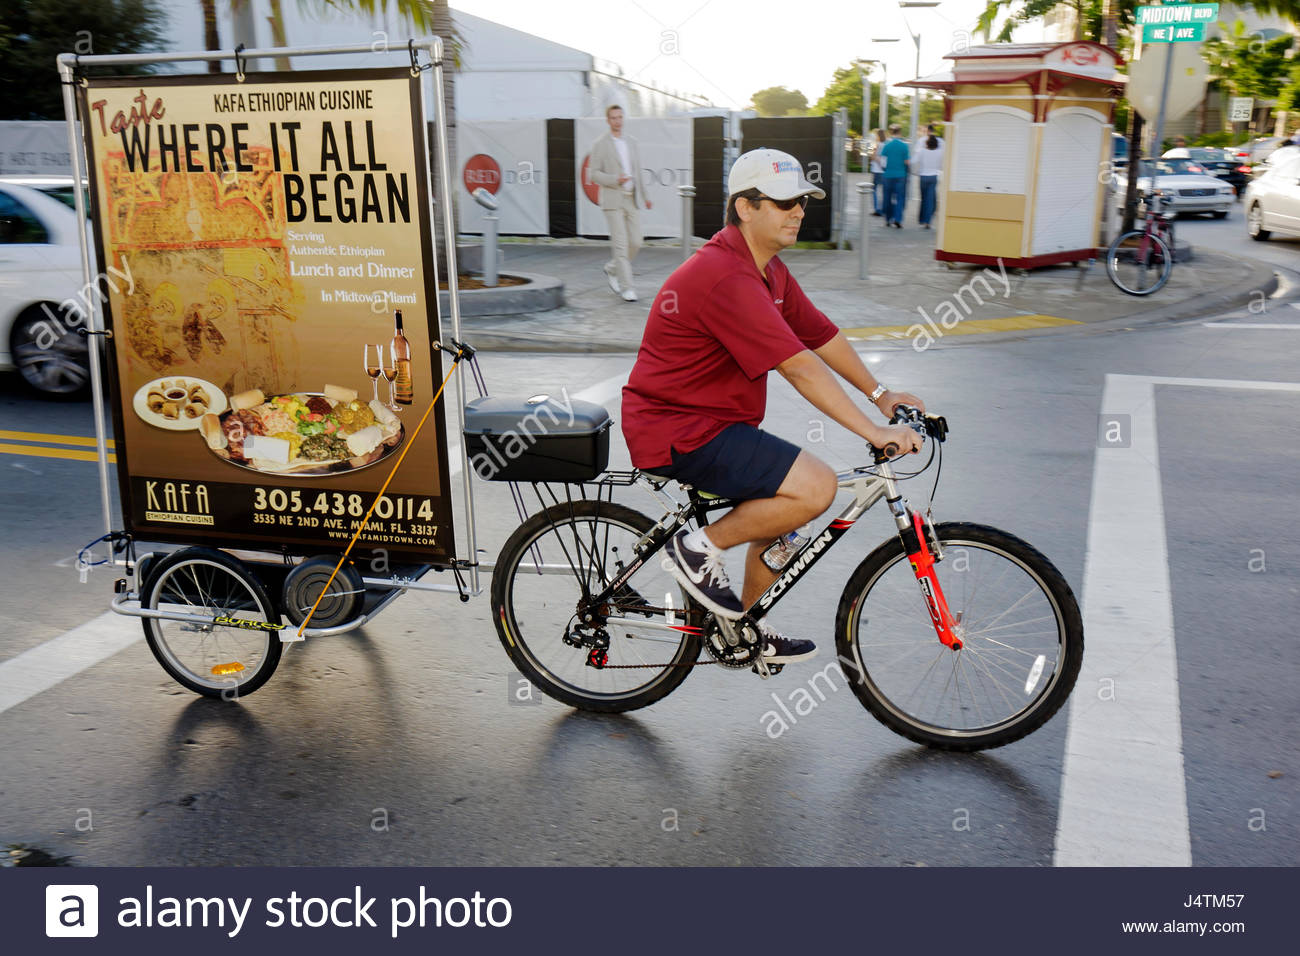 Miami Florida Midtown mann Fahrrad Reklametafeln Werbung